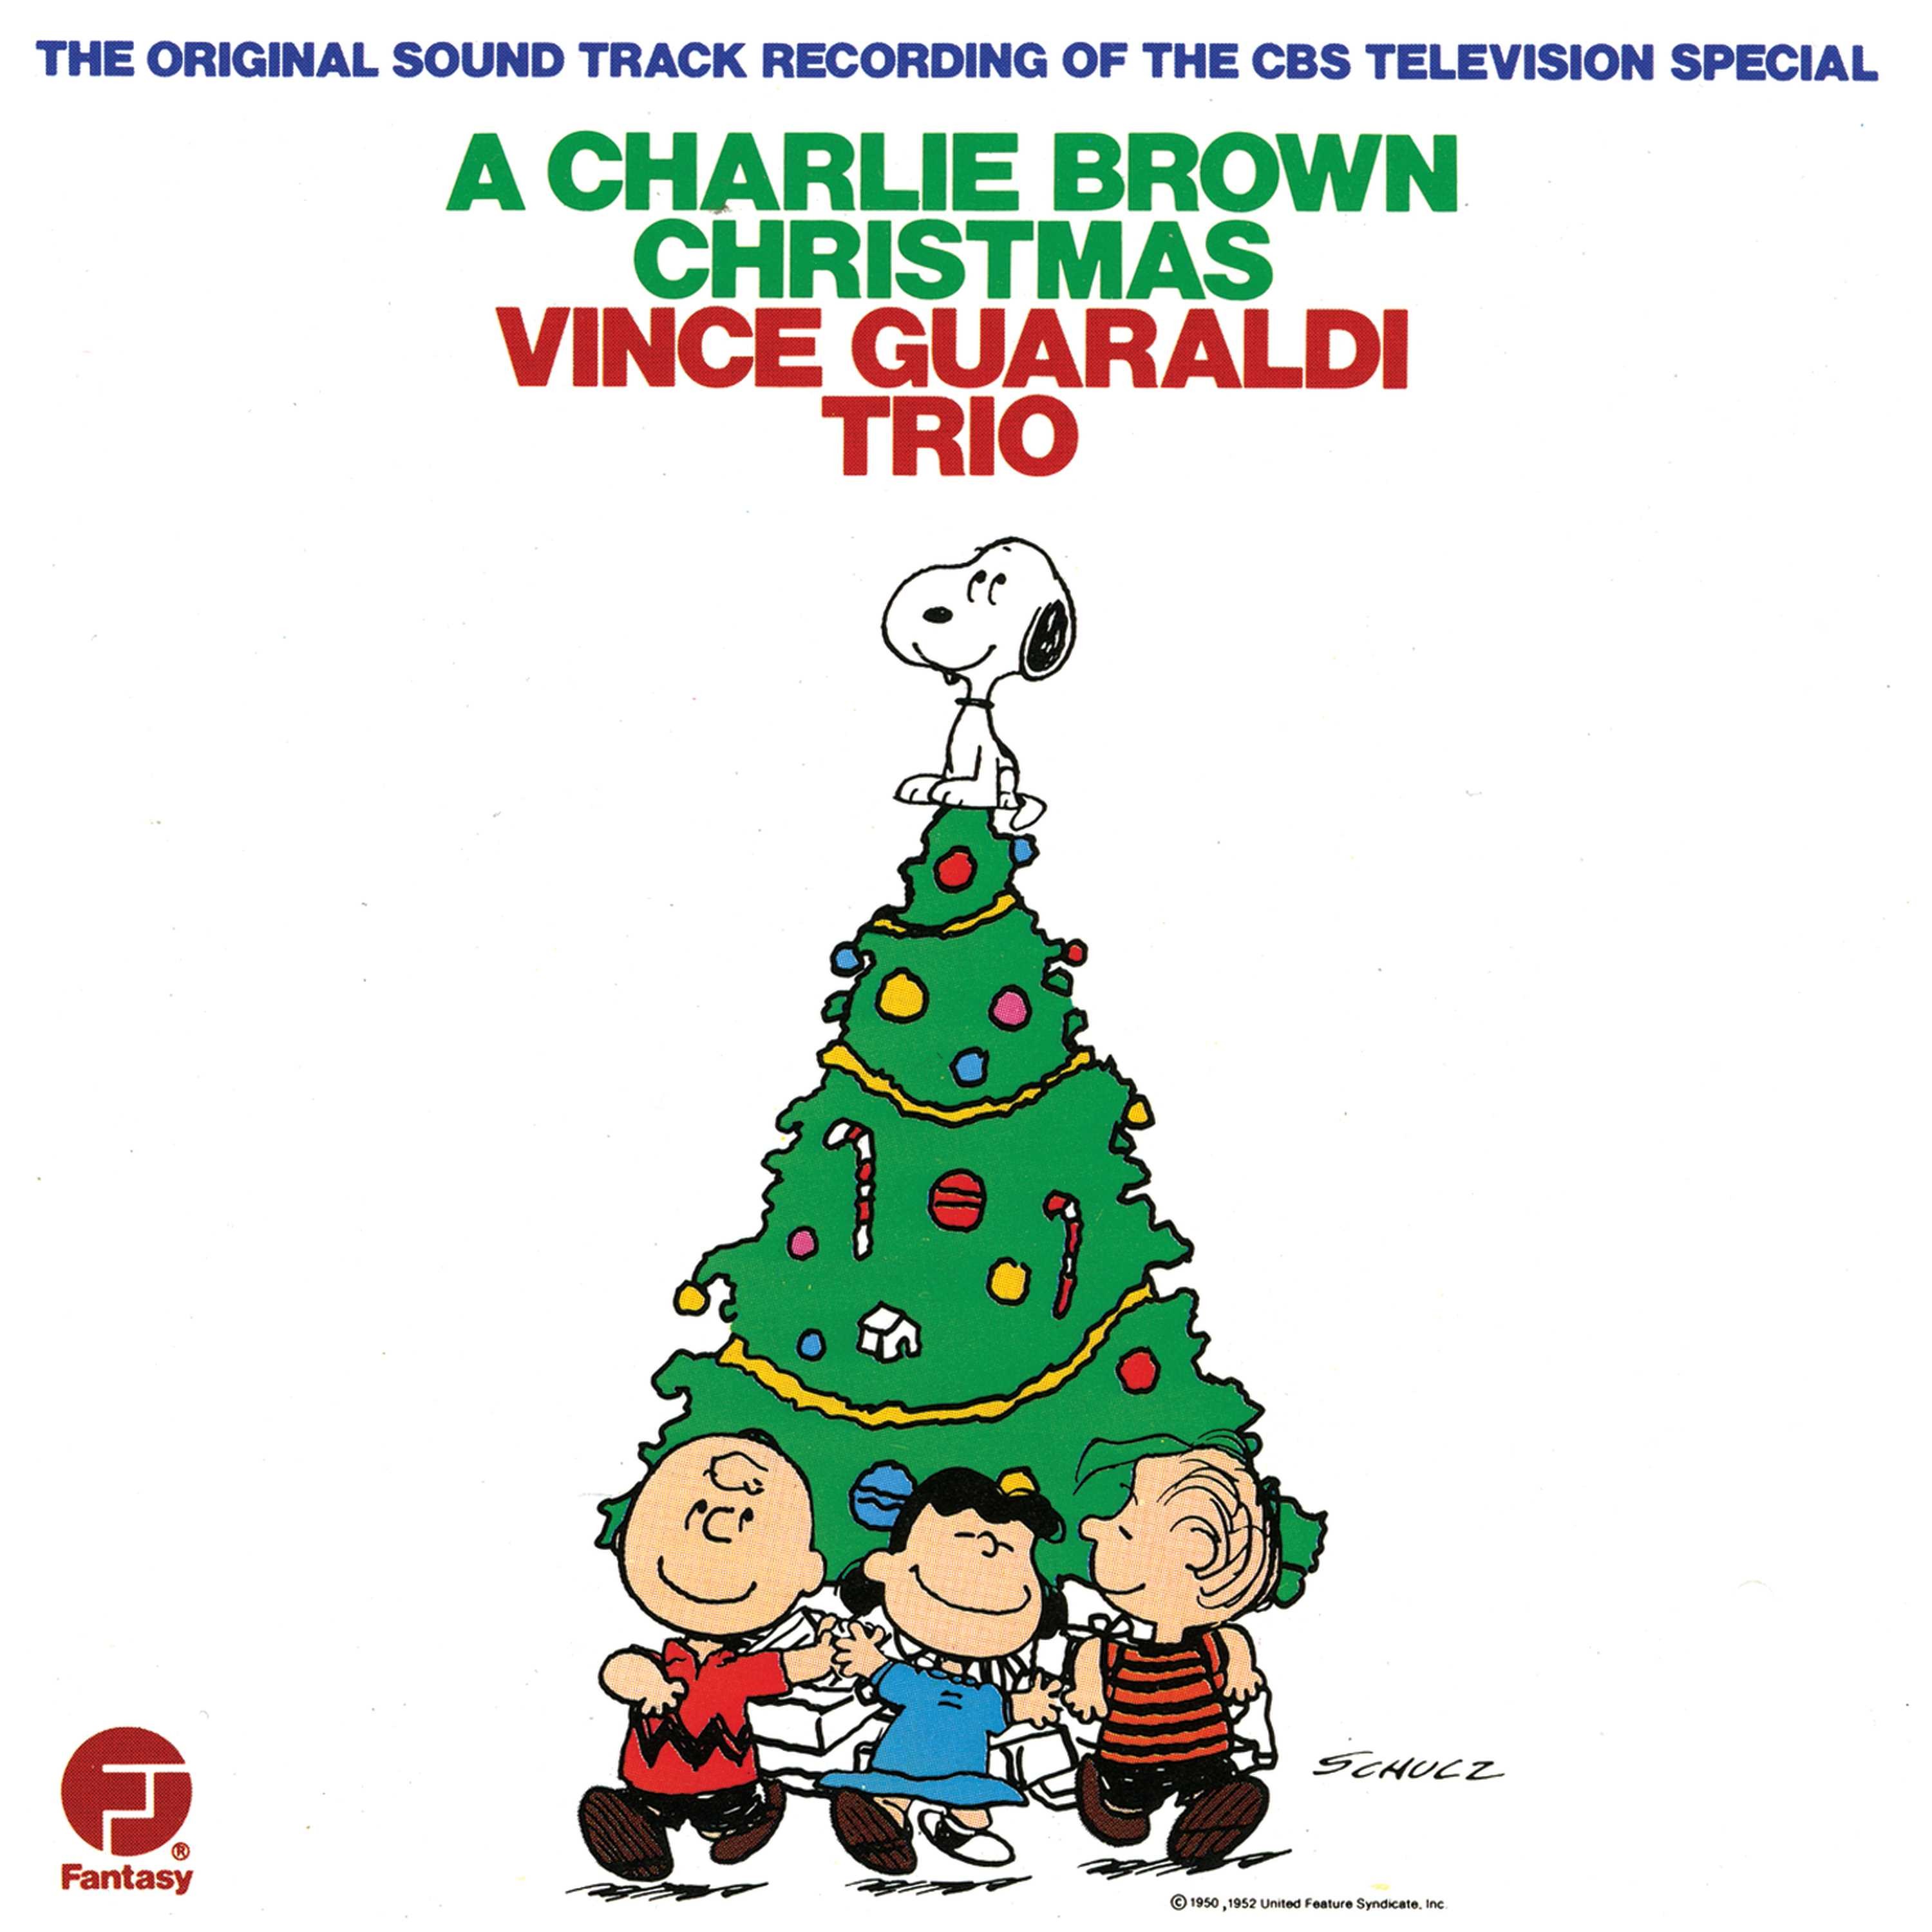 Vince Guaraldi Trio - A Charlie Brown Christmas (2017) Vinyl LP